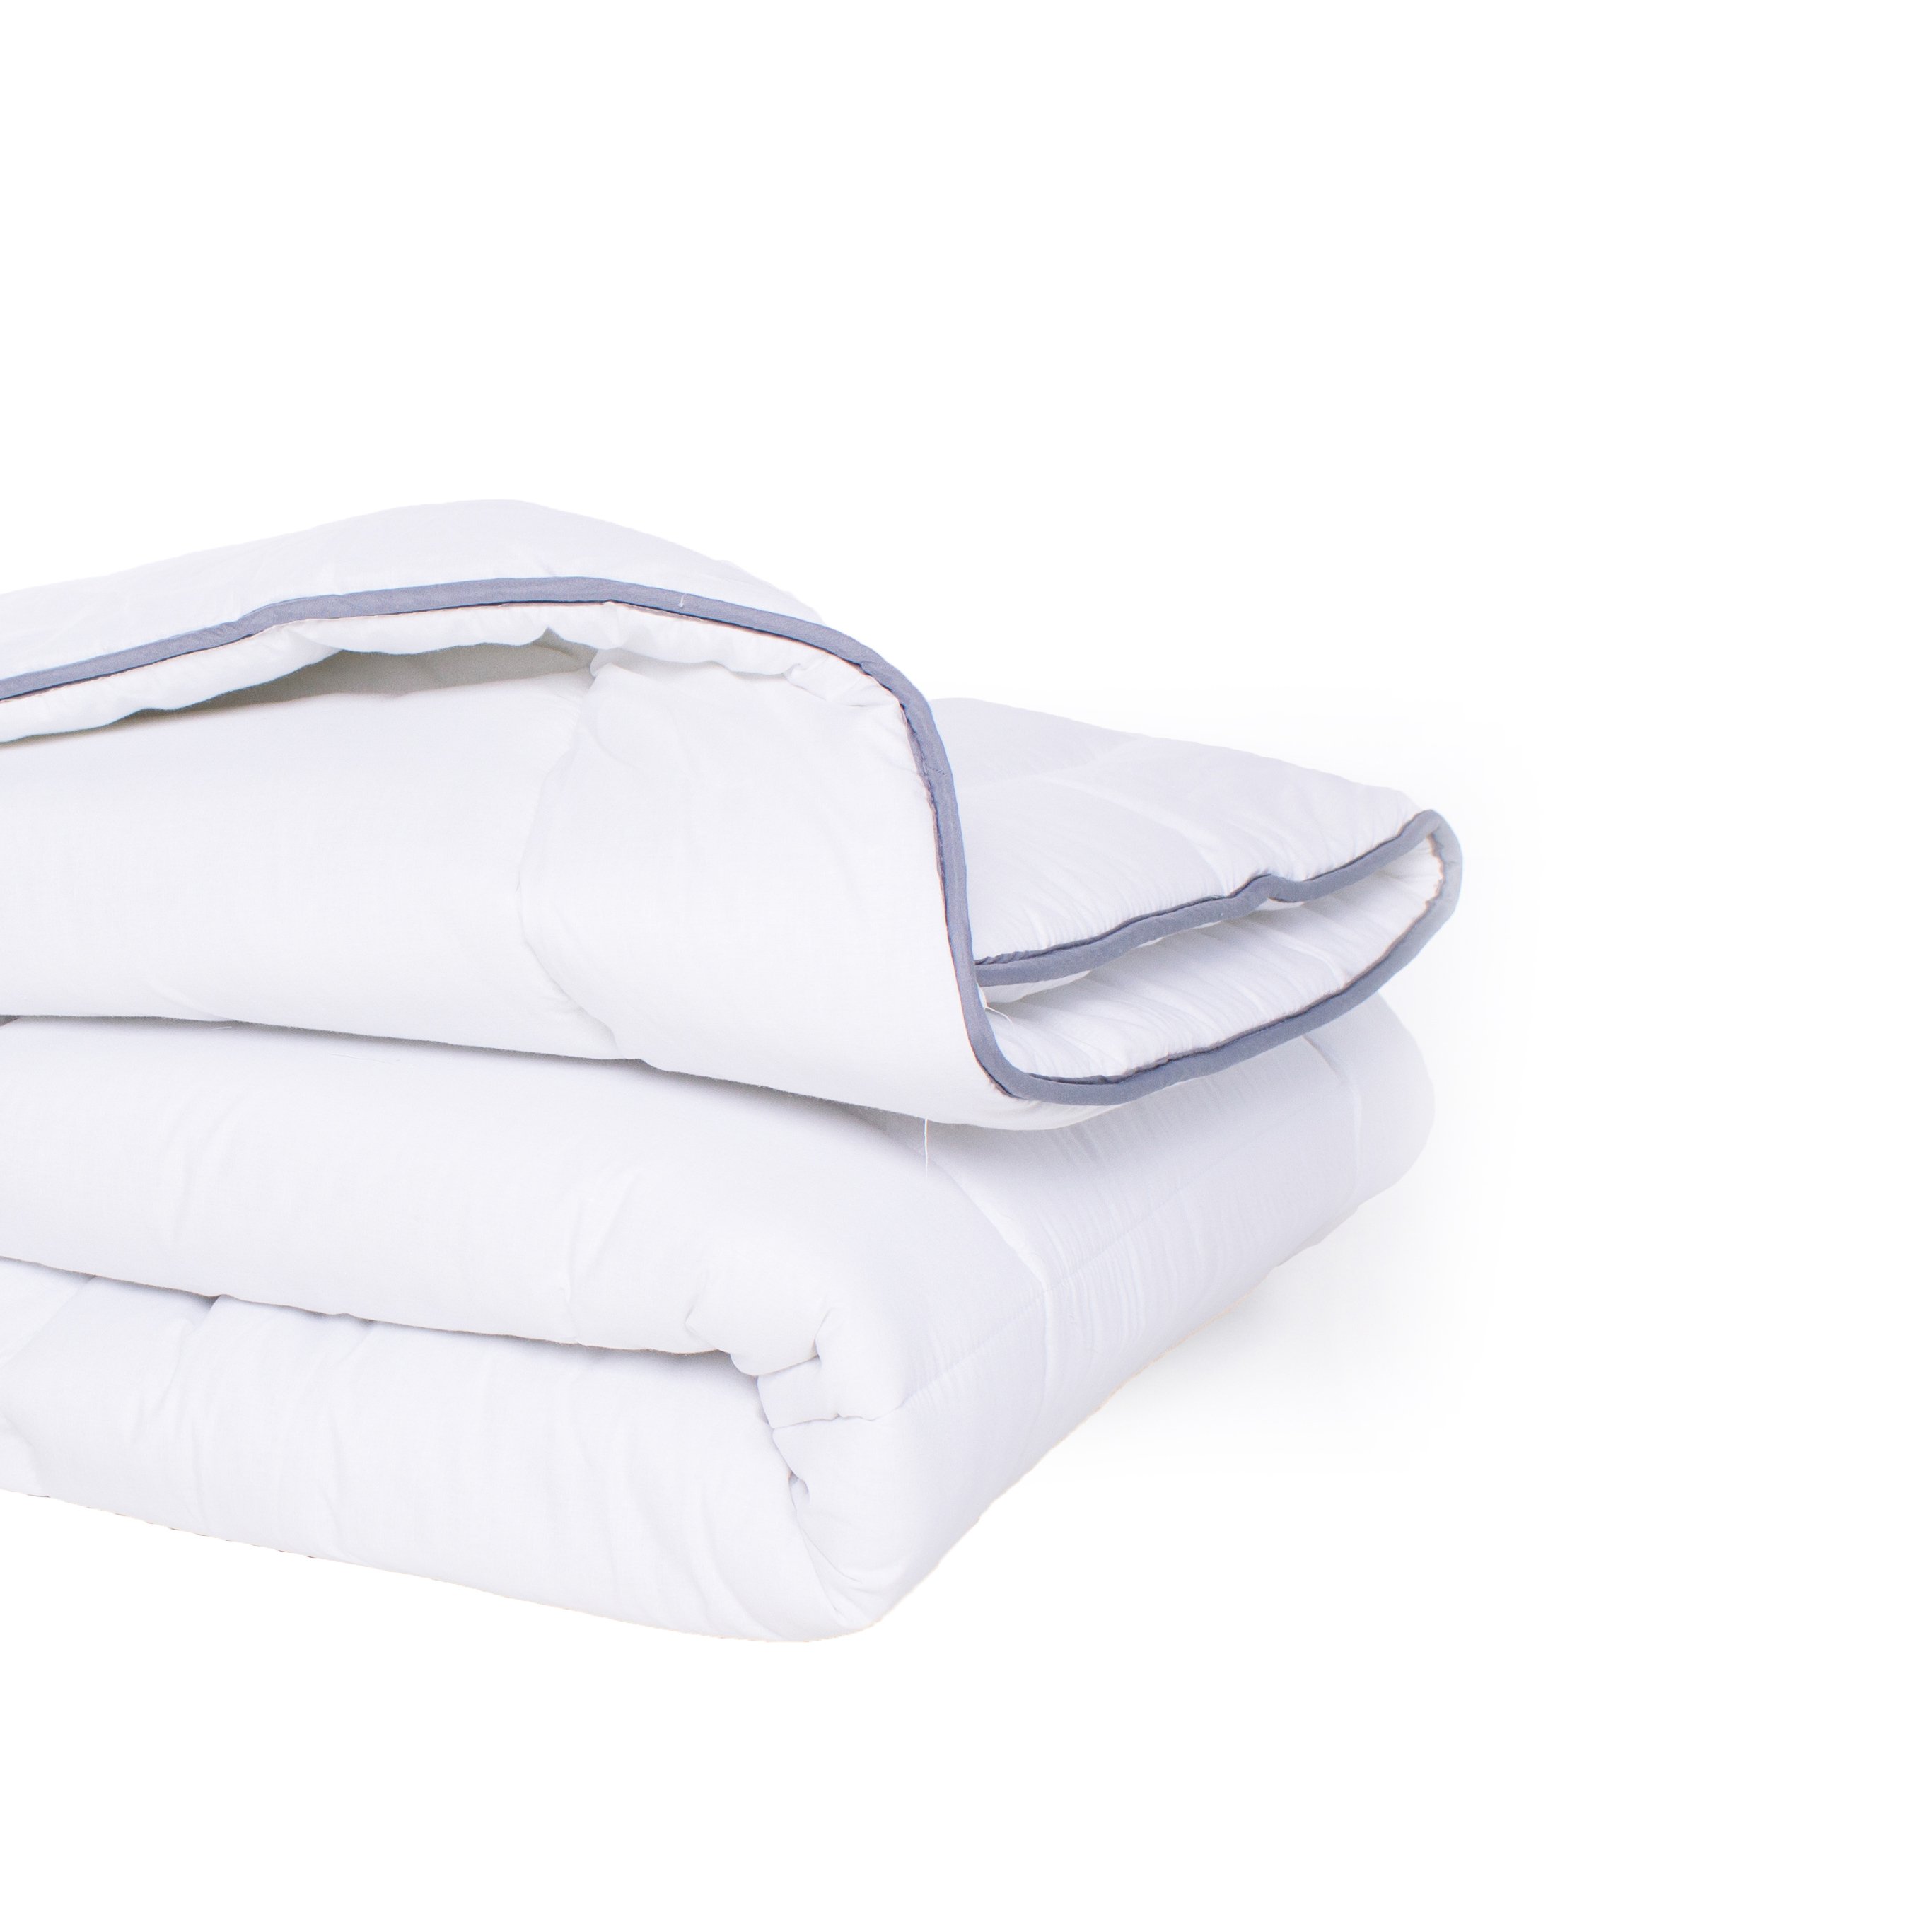 Одеяло шерстяное MirSon Royal №026, демисезонное, 155x215 см, белое - фото 3